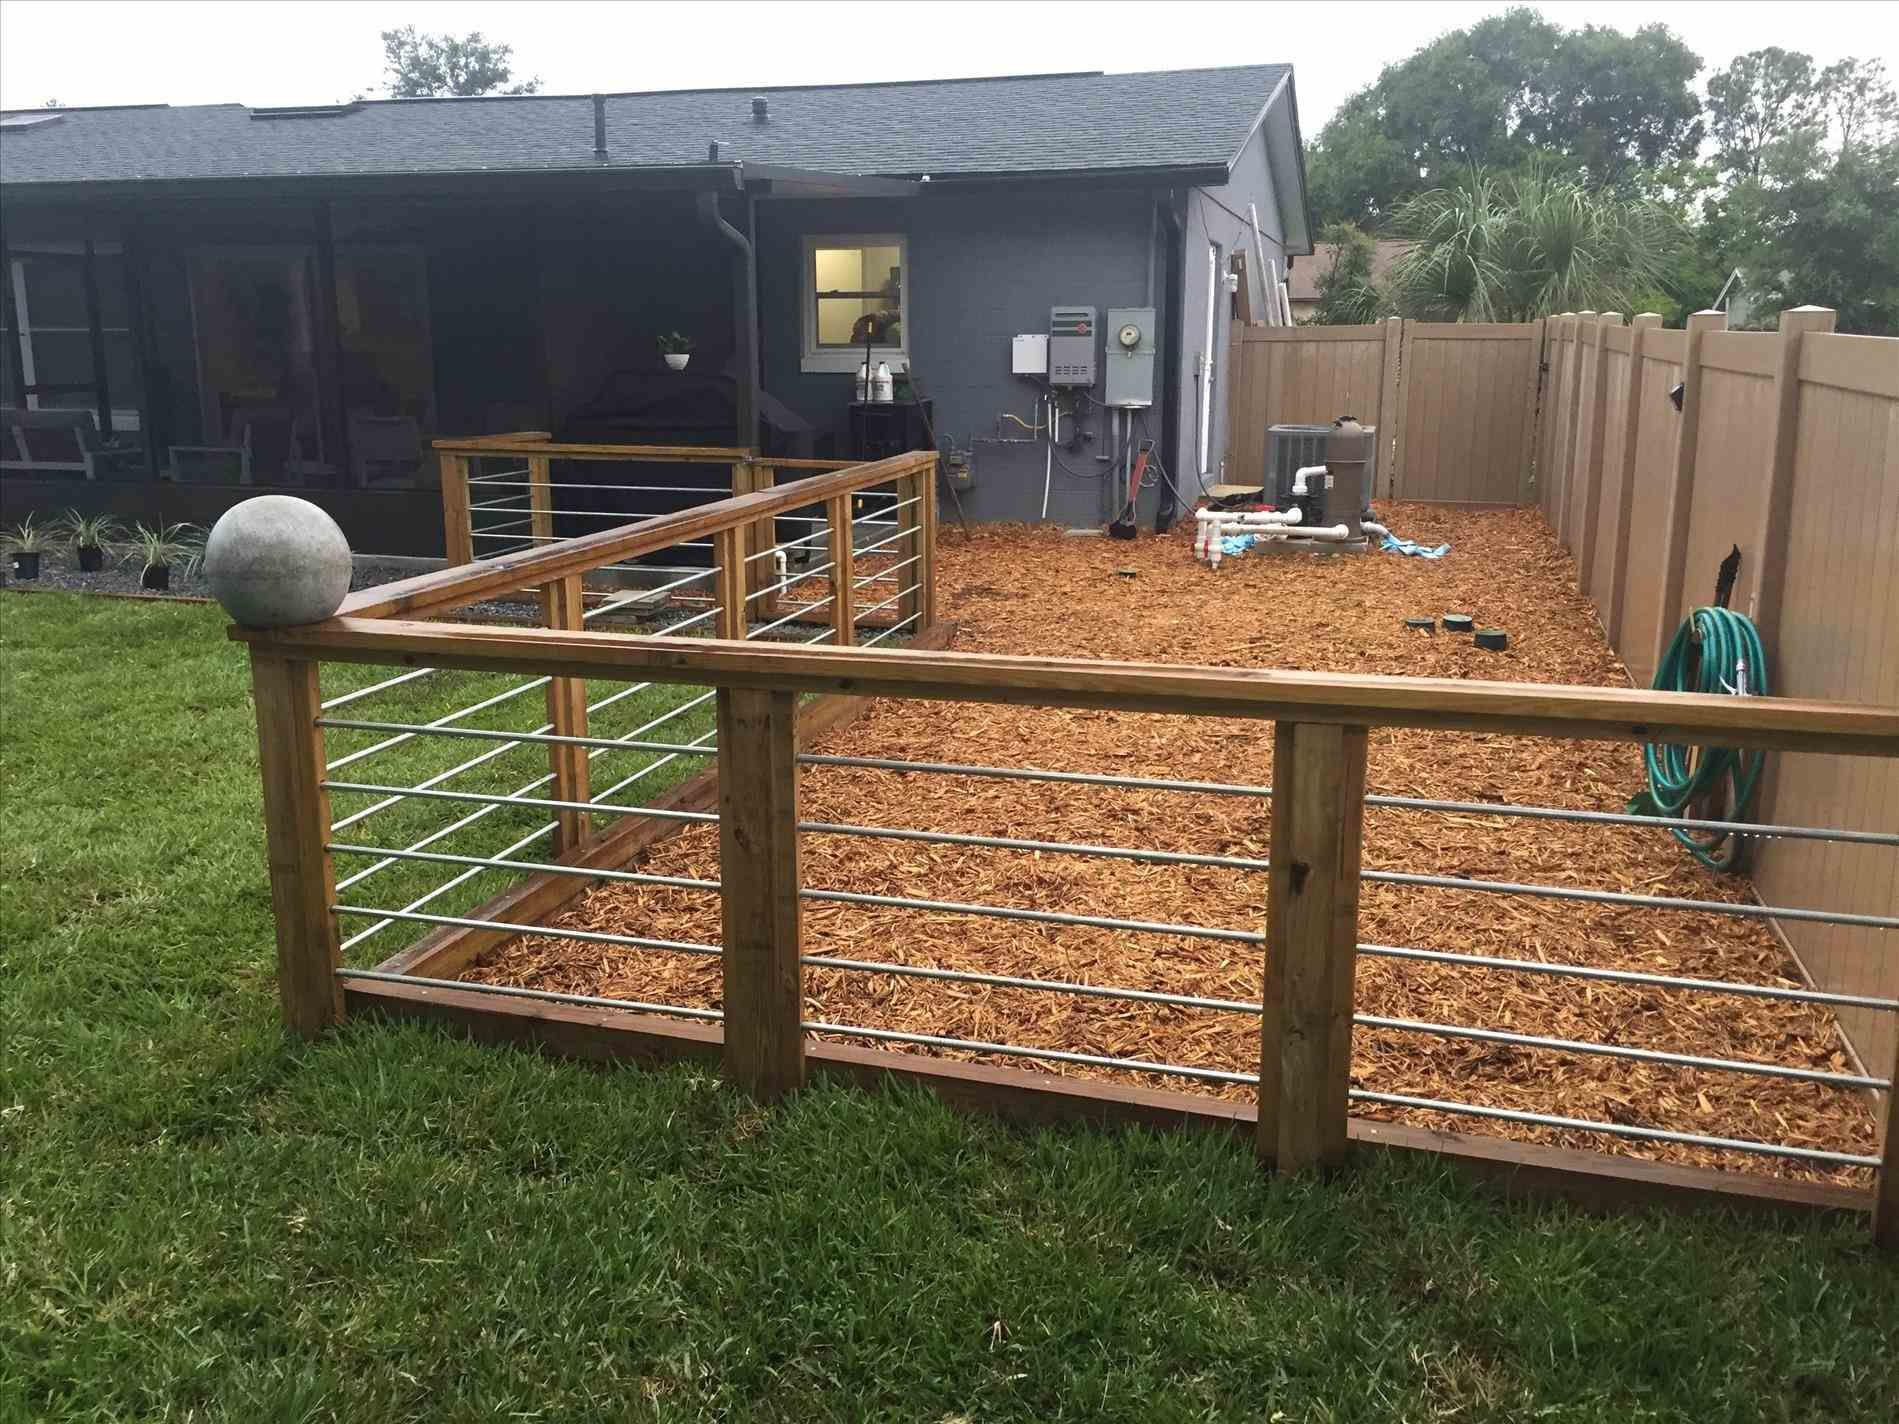 21.pin laura ann on yarding dog friendly backyard dog kennel via SIMPHOME.COM